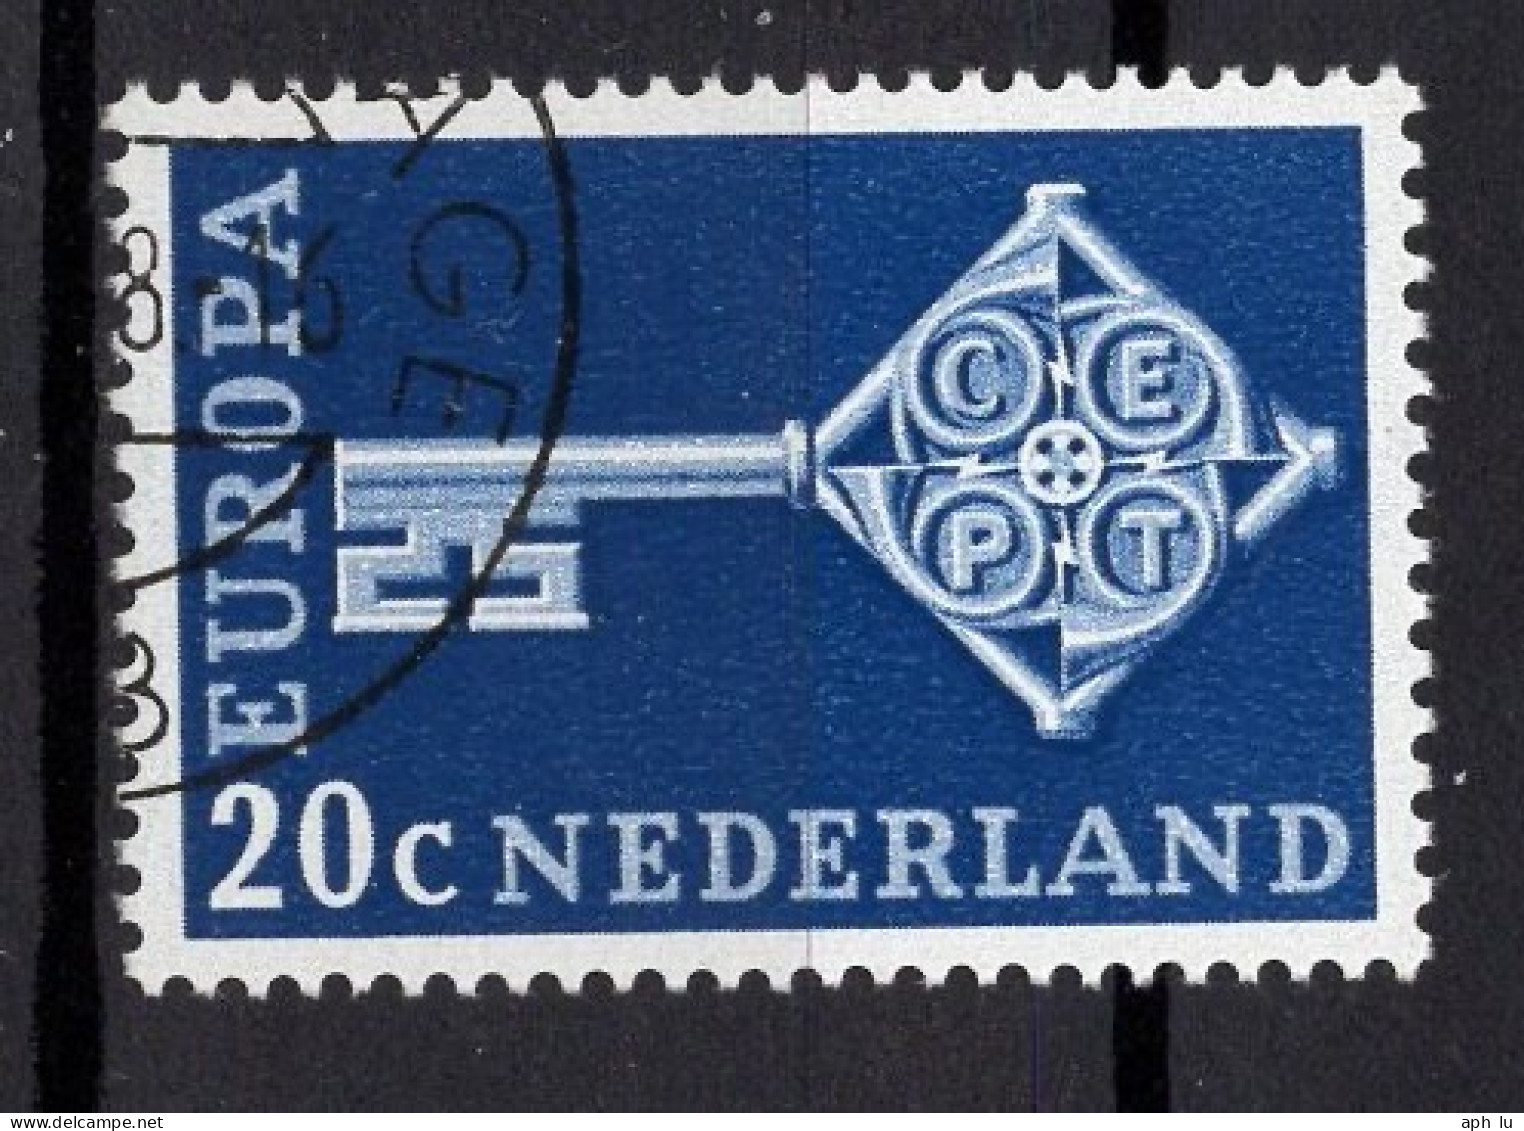 Marke 1968 Gestempelt (h340403) - Used Stamps